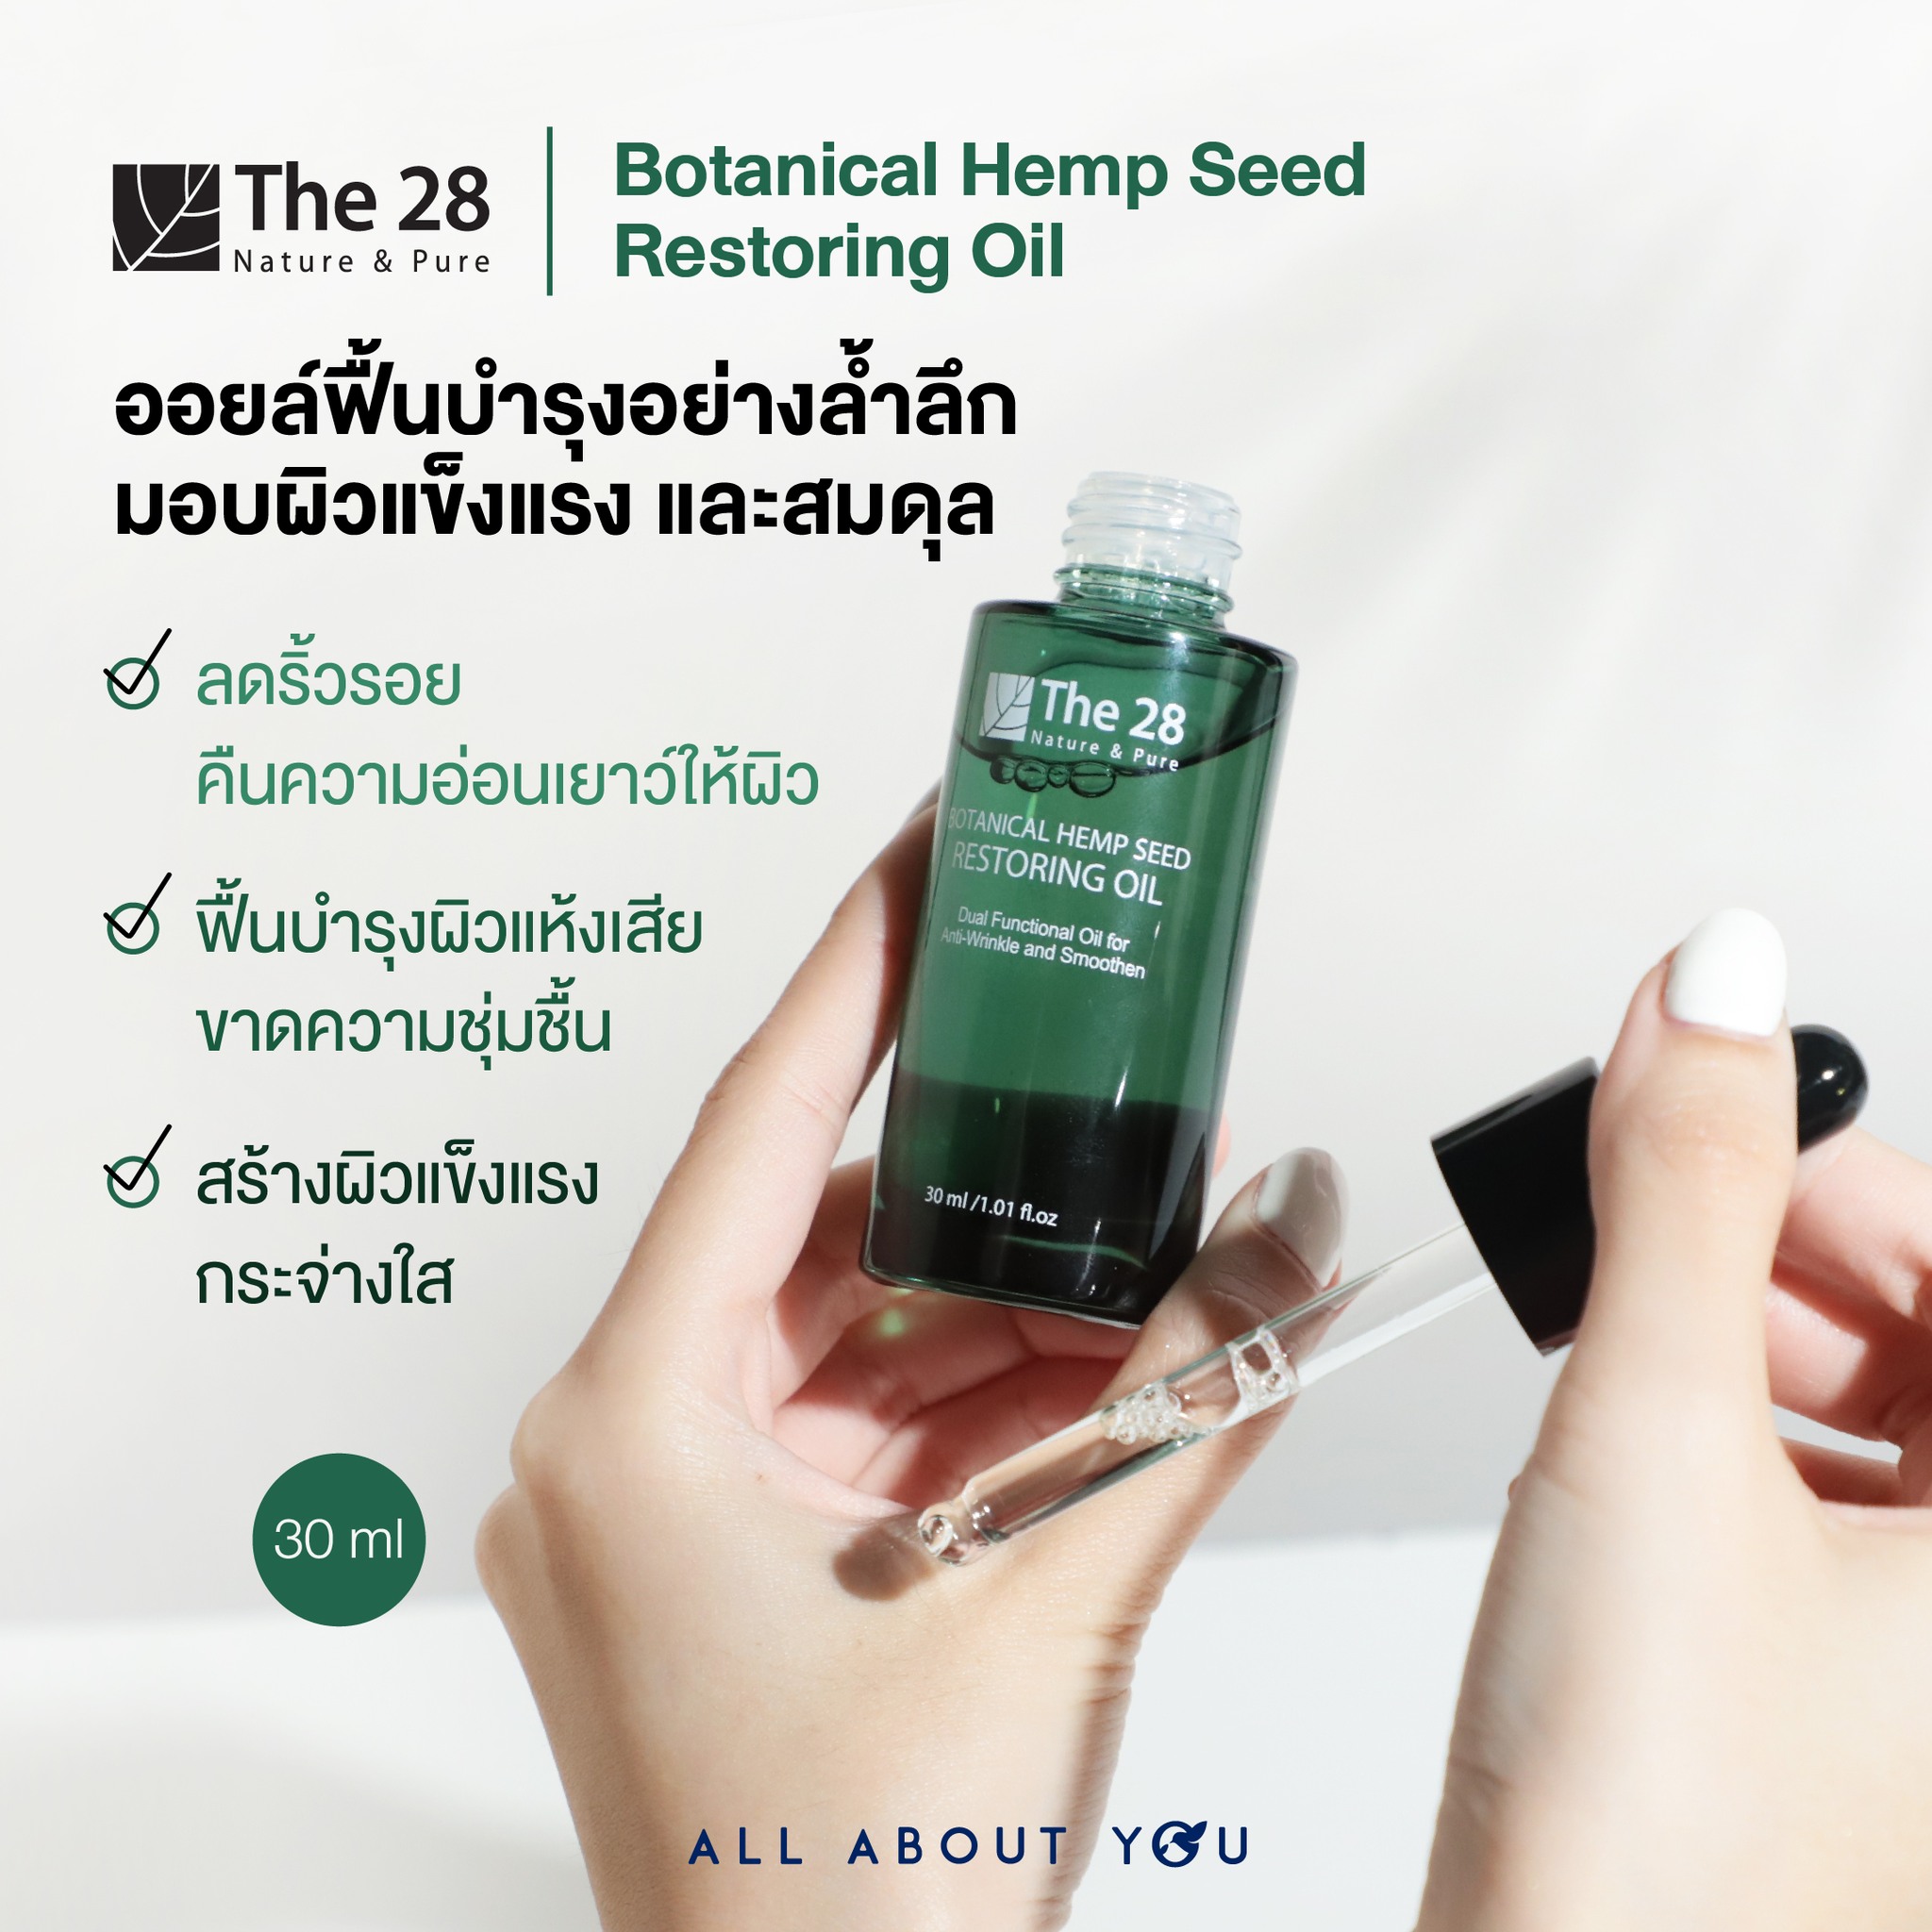 The 28 Botanical Hemp Seed Restoring Oil